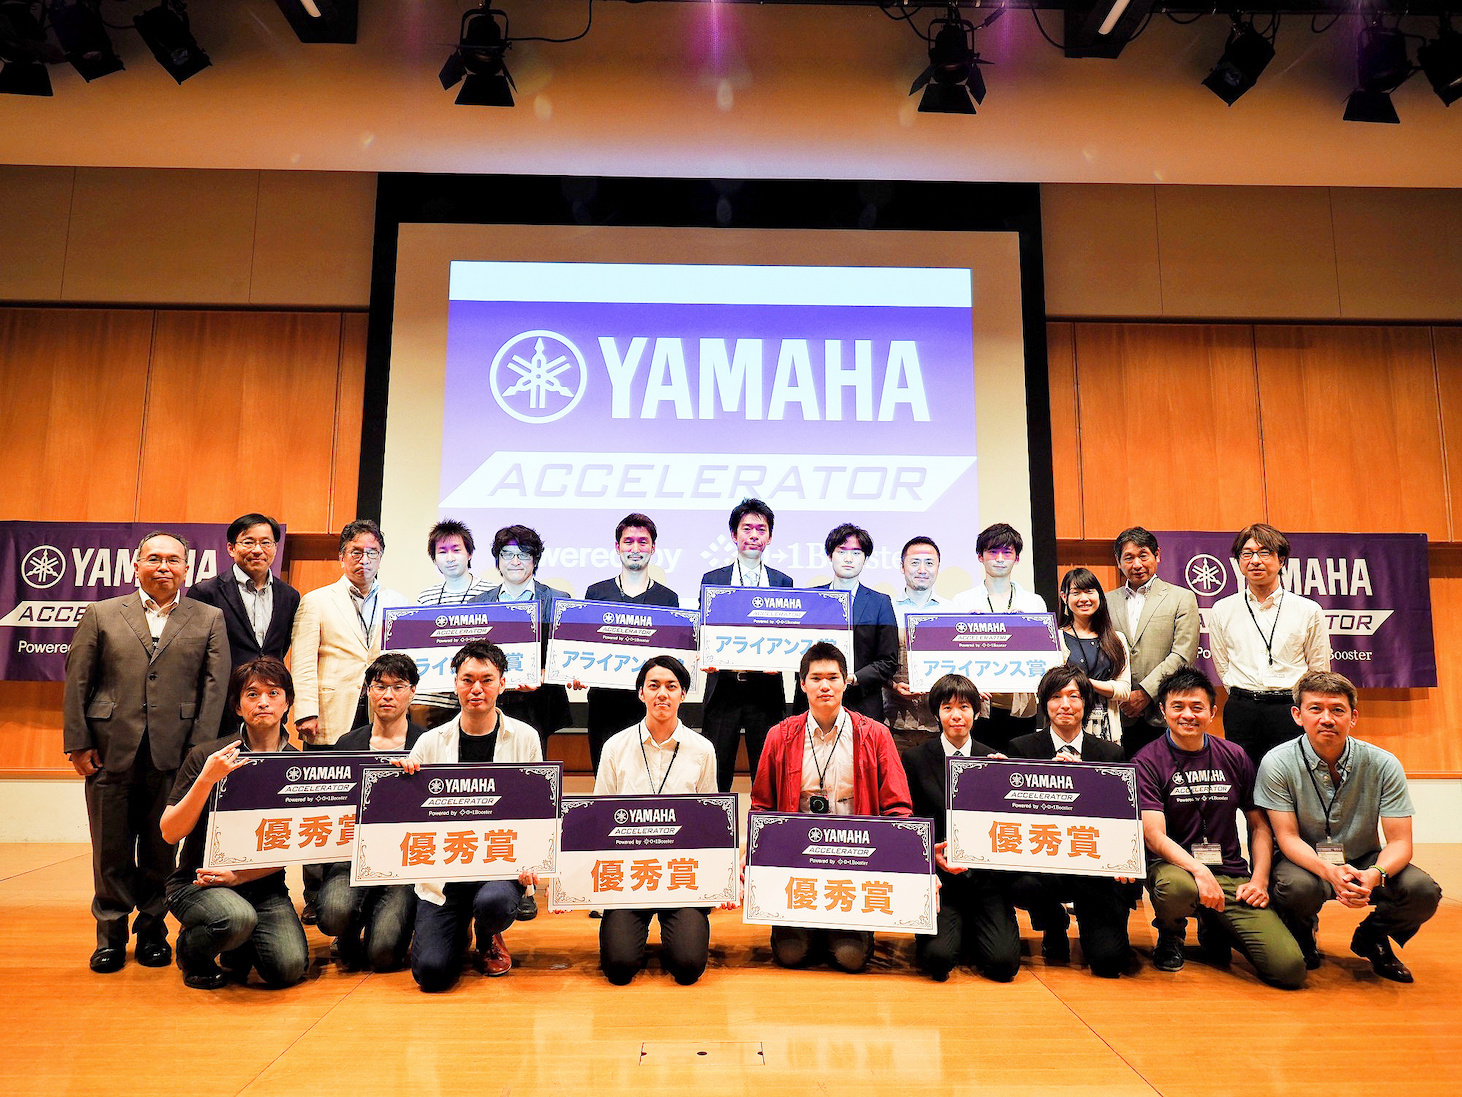 Group photo of Yamaha Accelerator participants